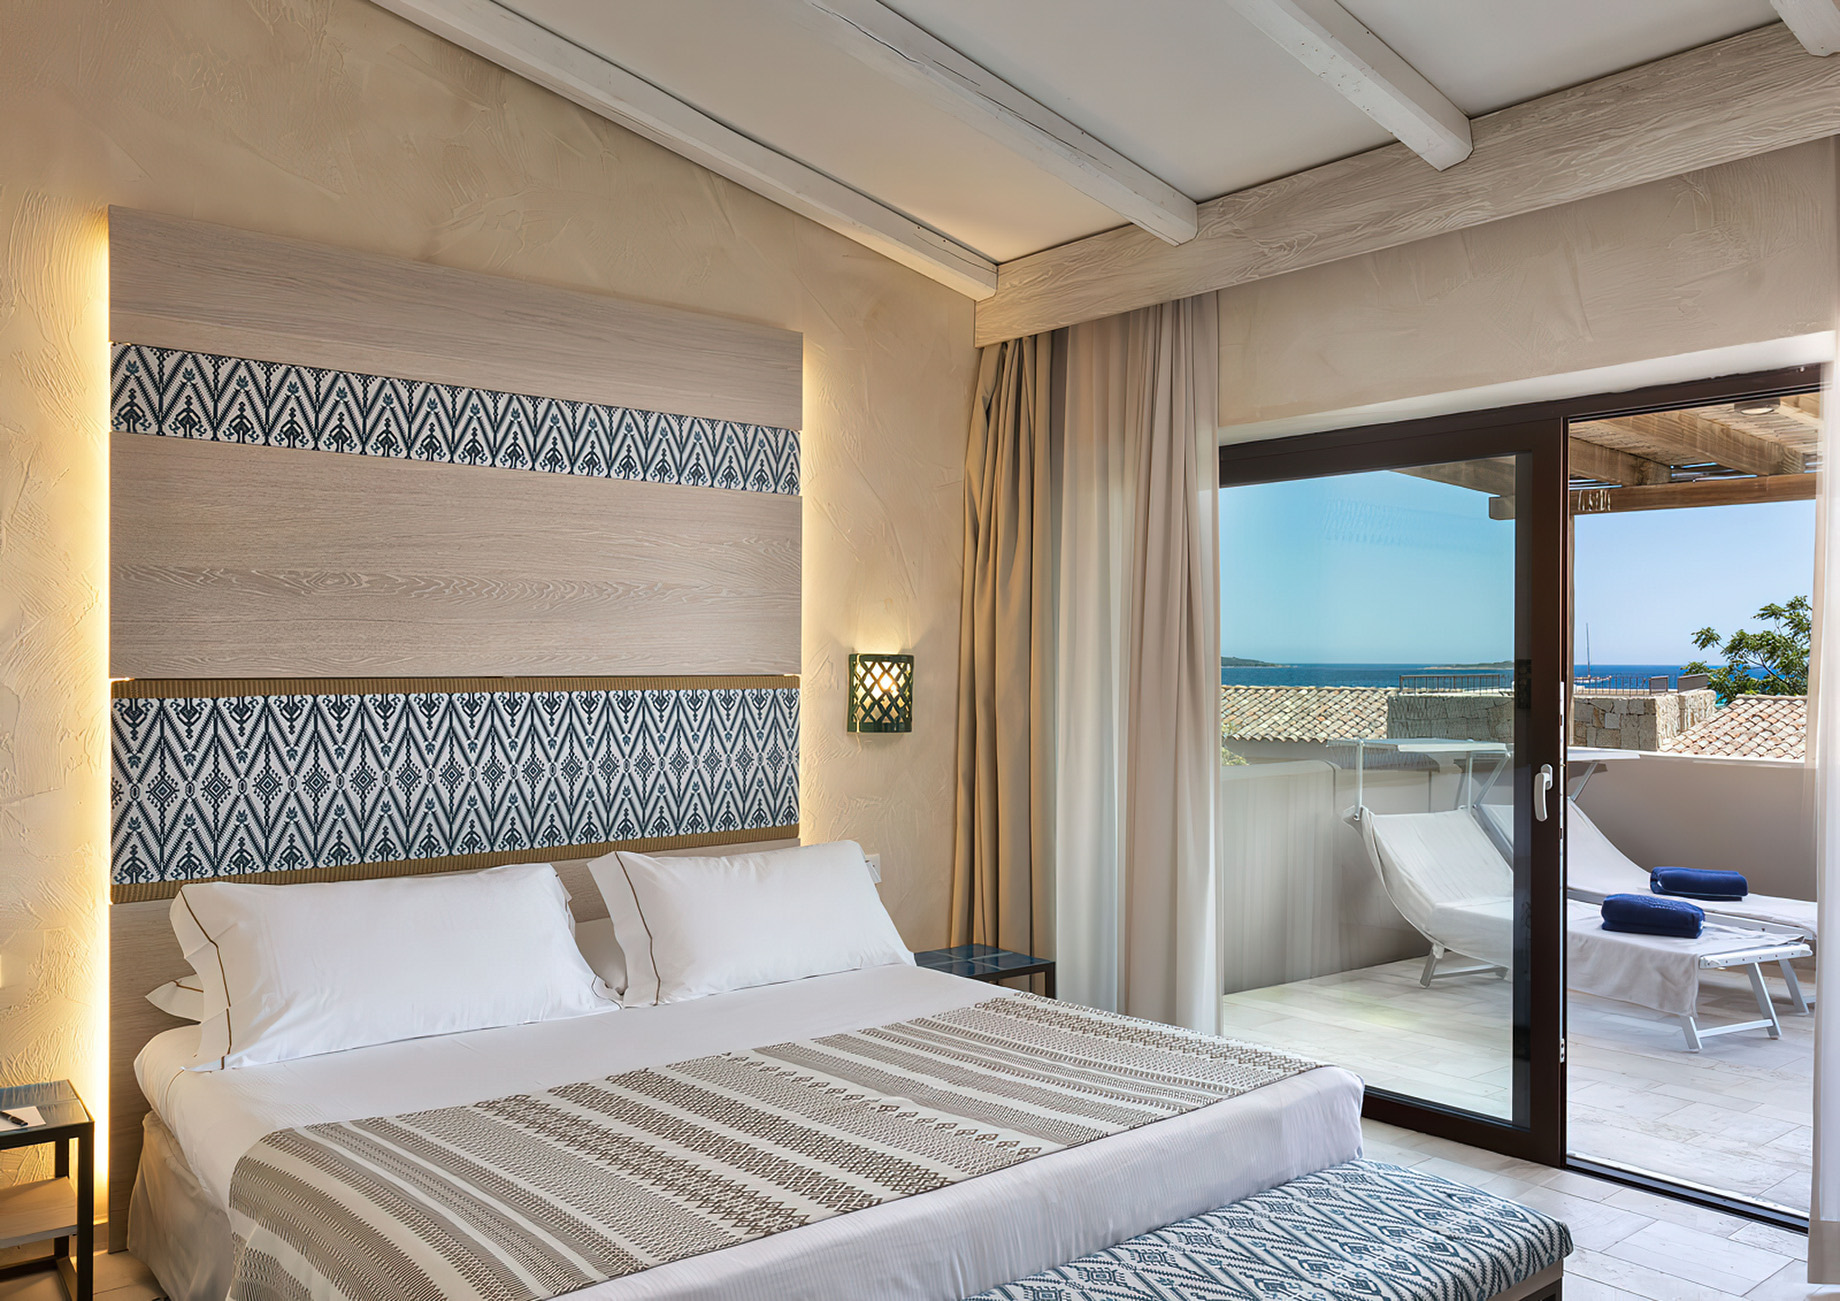 Baglioni Resort Sardinia – San Teodoro, Sardegna, Italy – Sea View Suite Bed